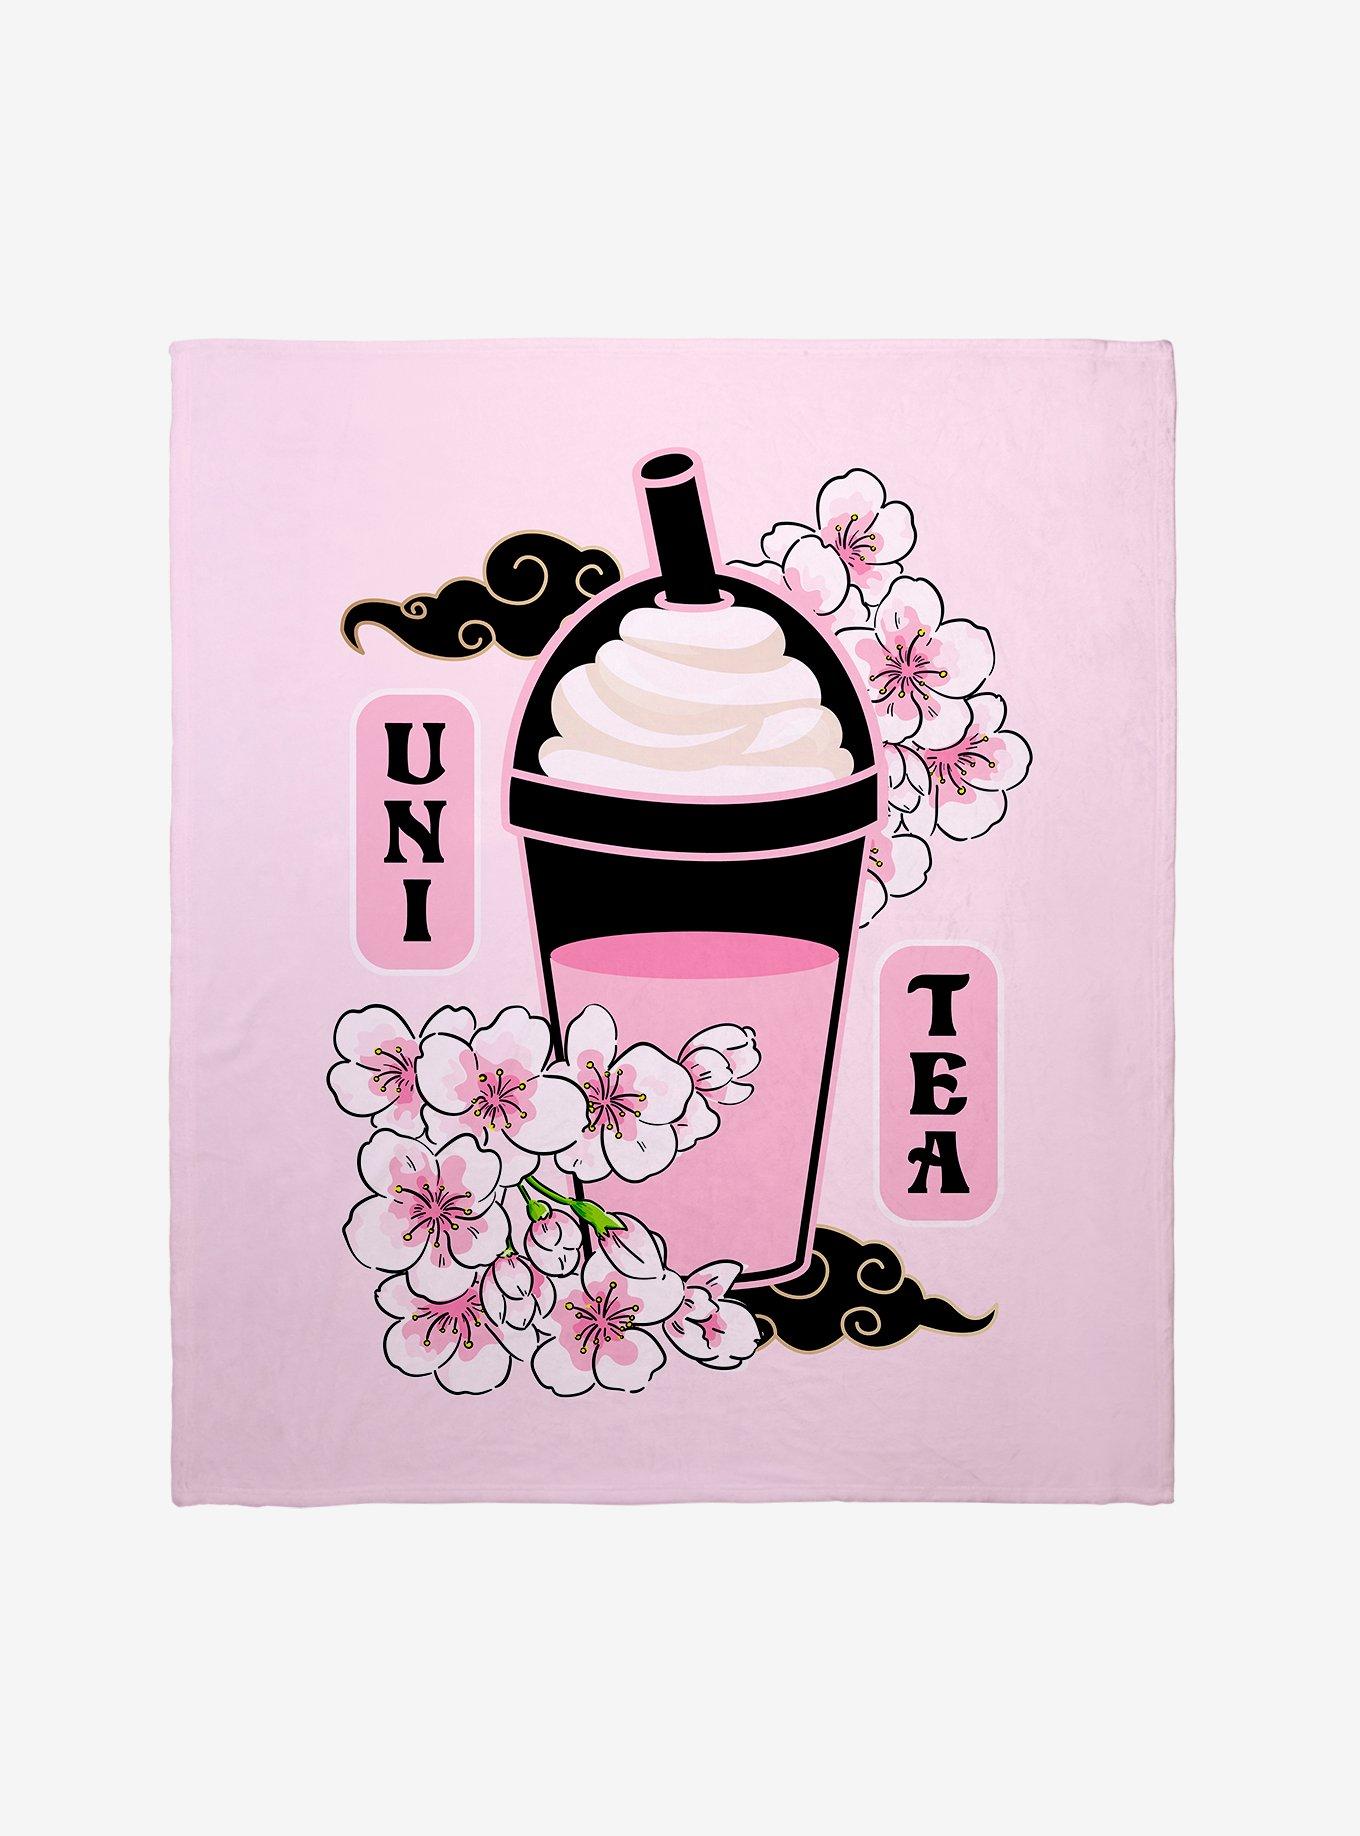 Uni Tea Cherry Blossom Boba Throw Blanket